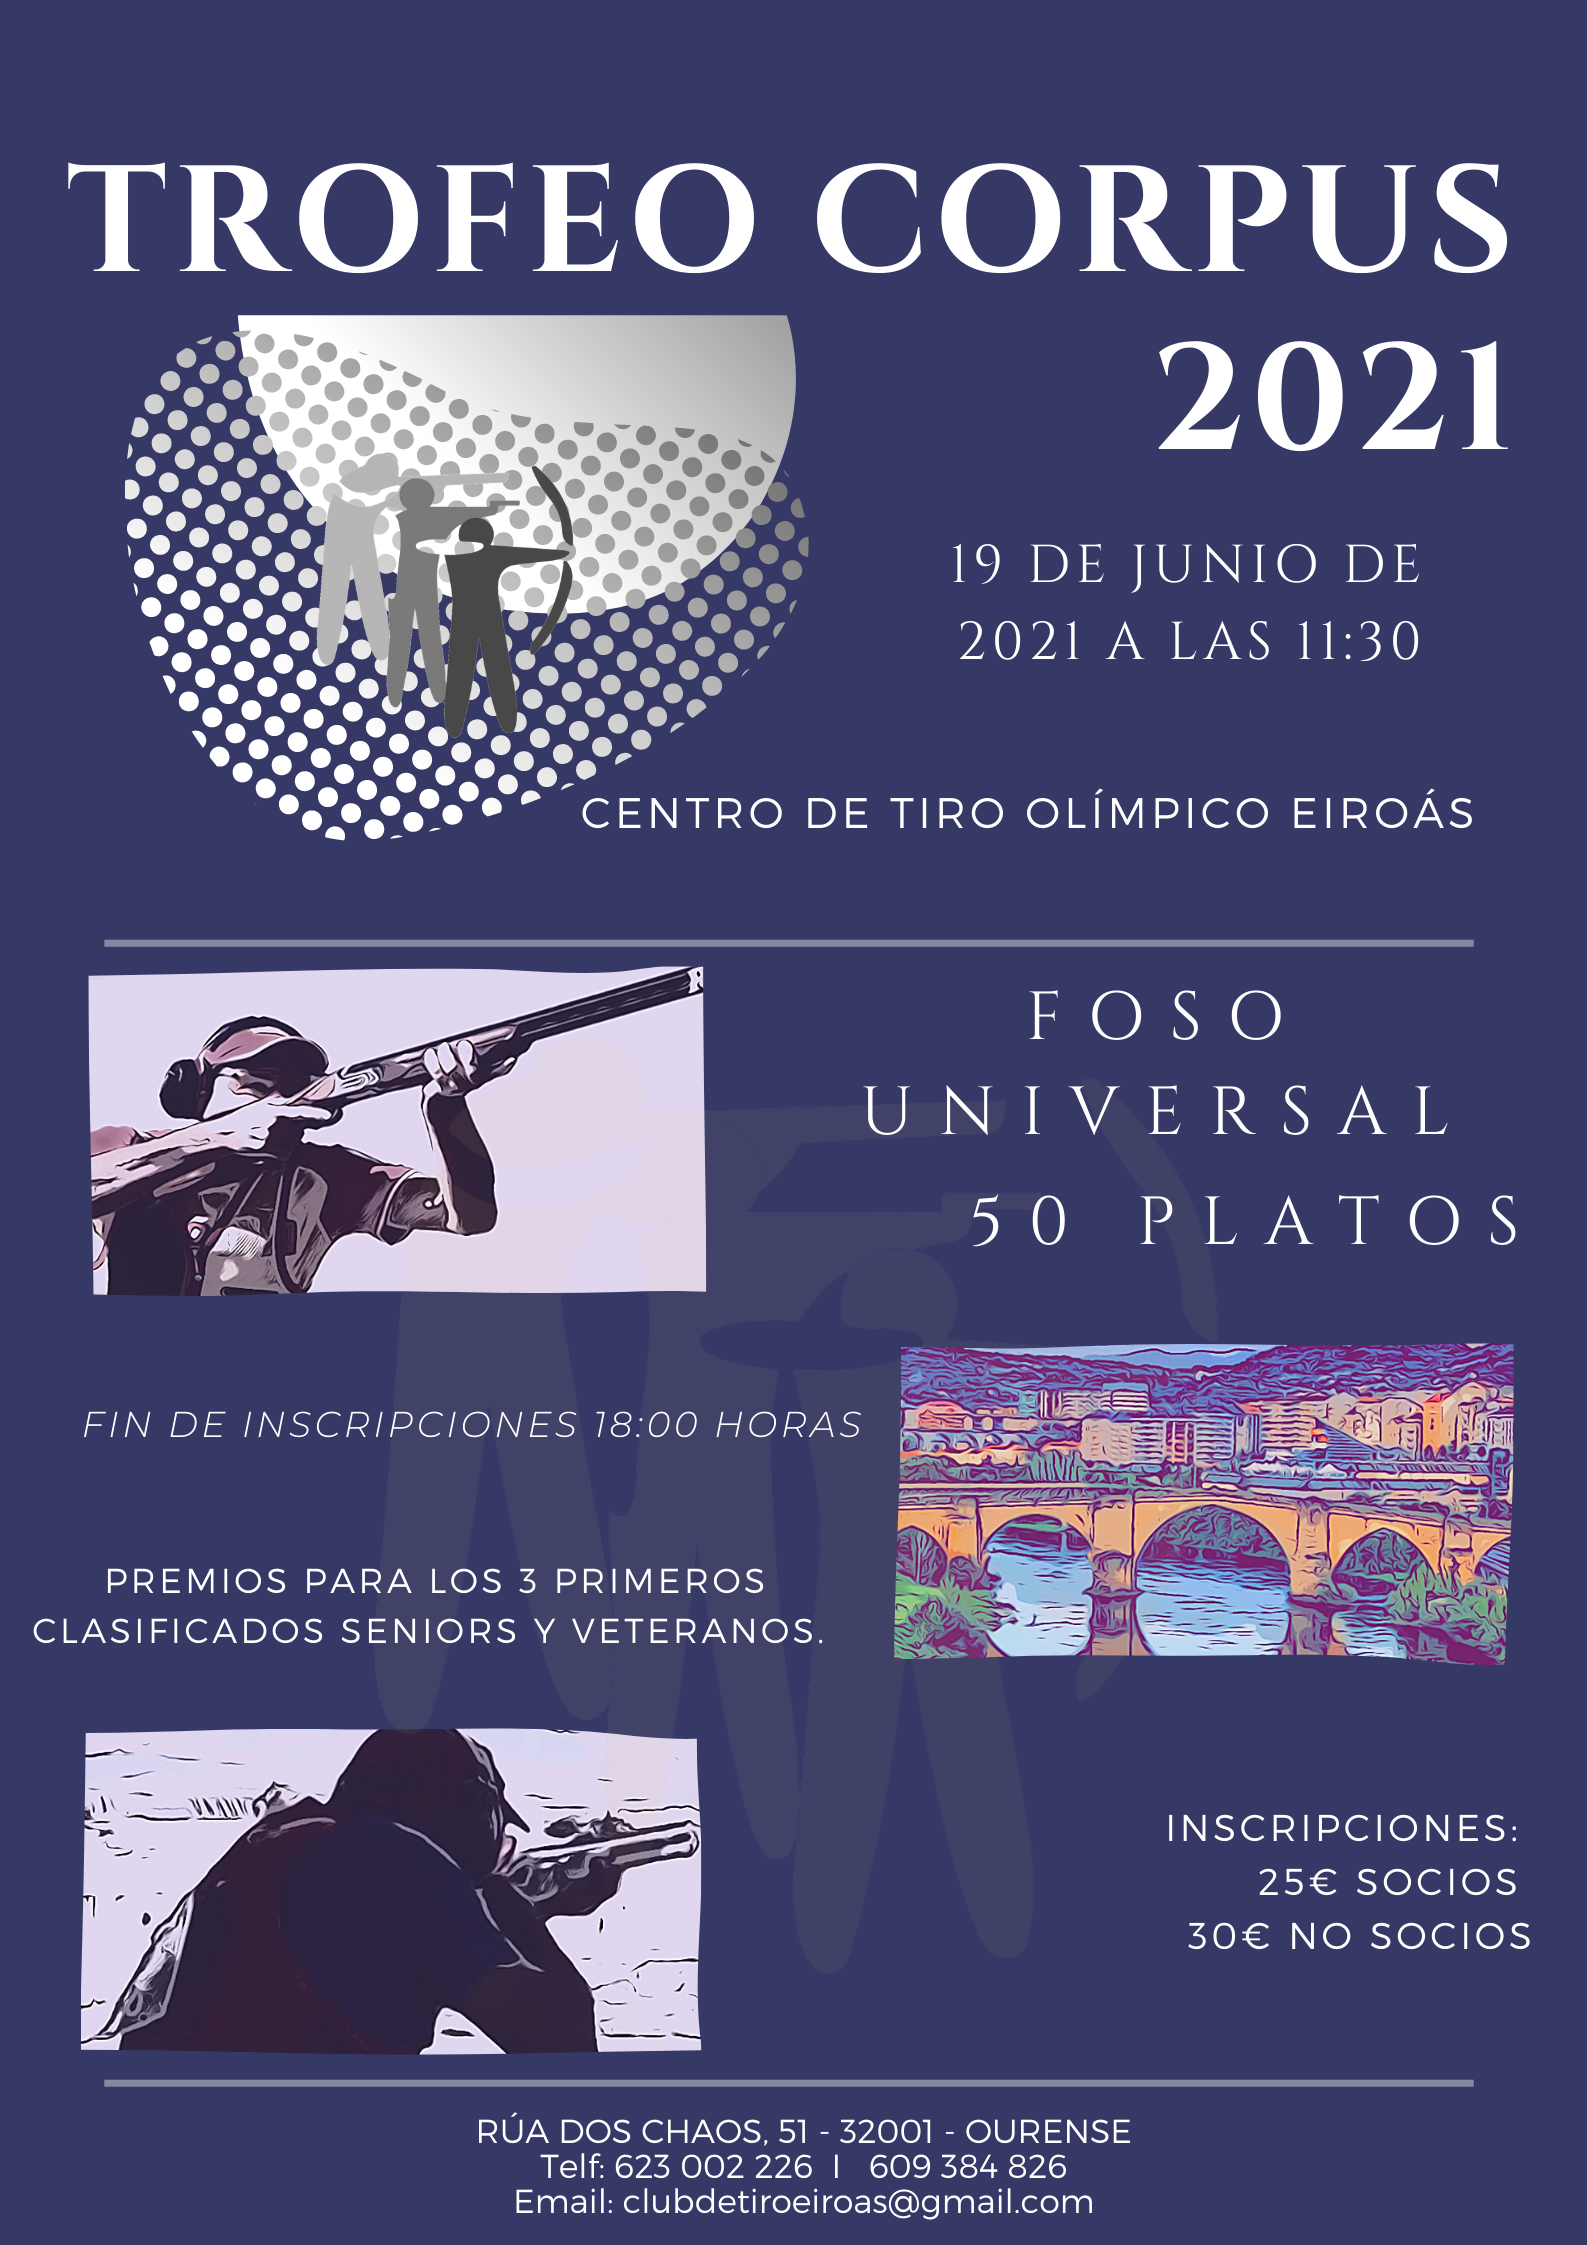 TROFEO CORPUS 2021 - FOSO UNIVERSAL 50 PLATOS